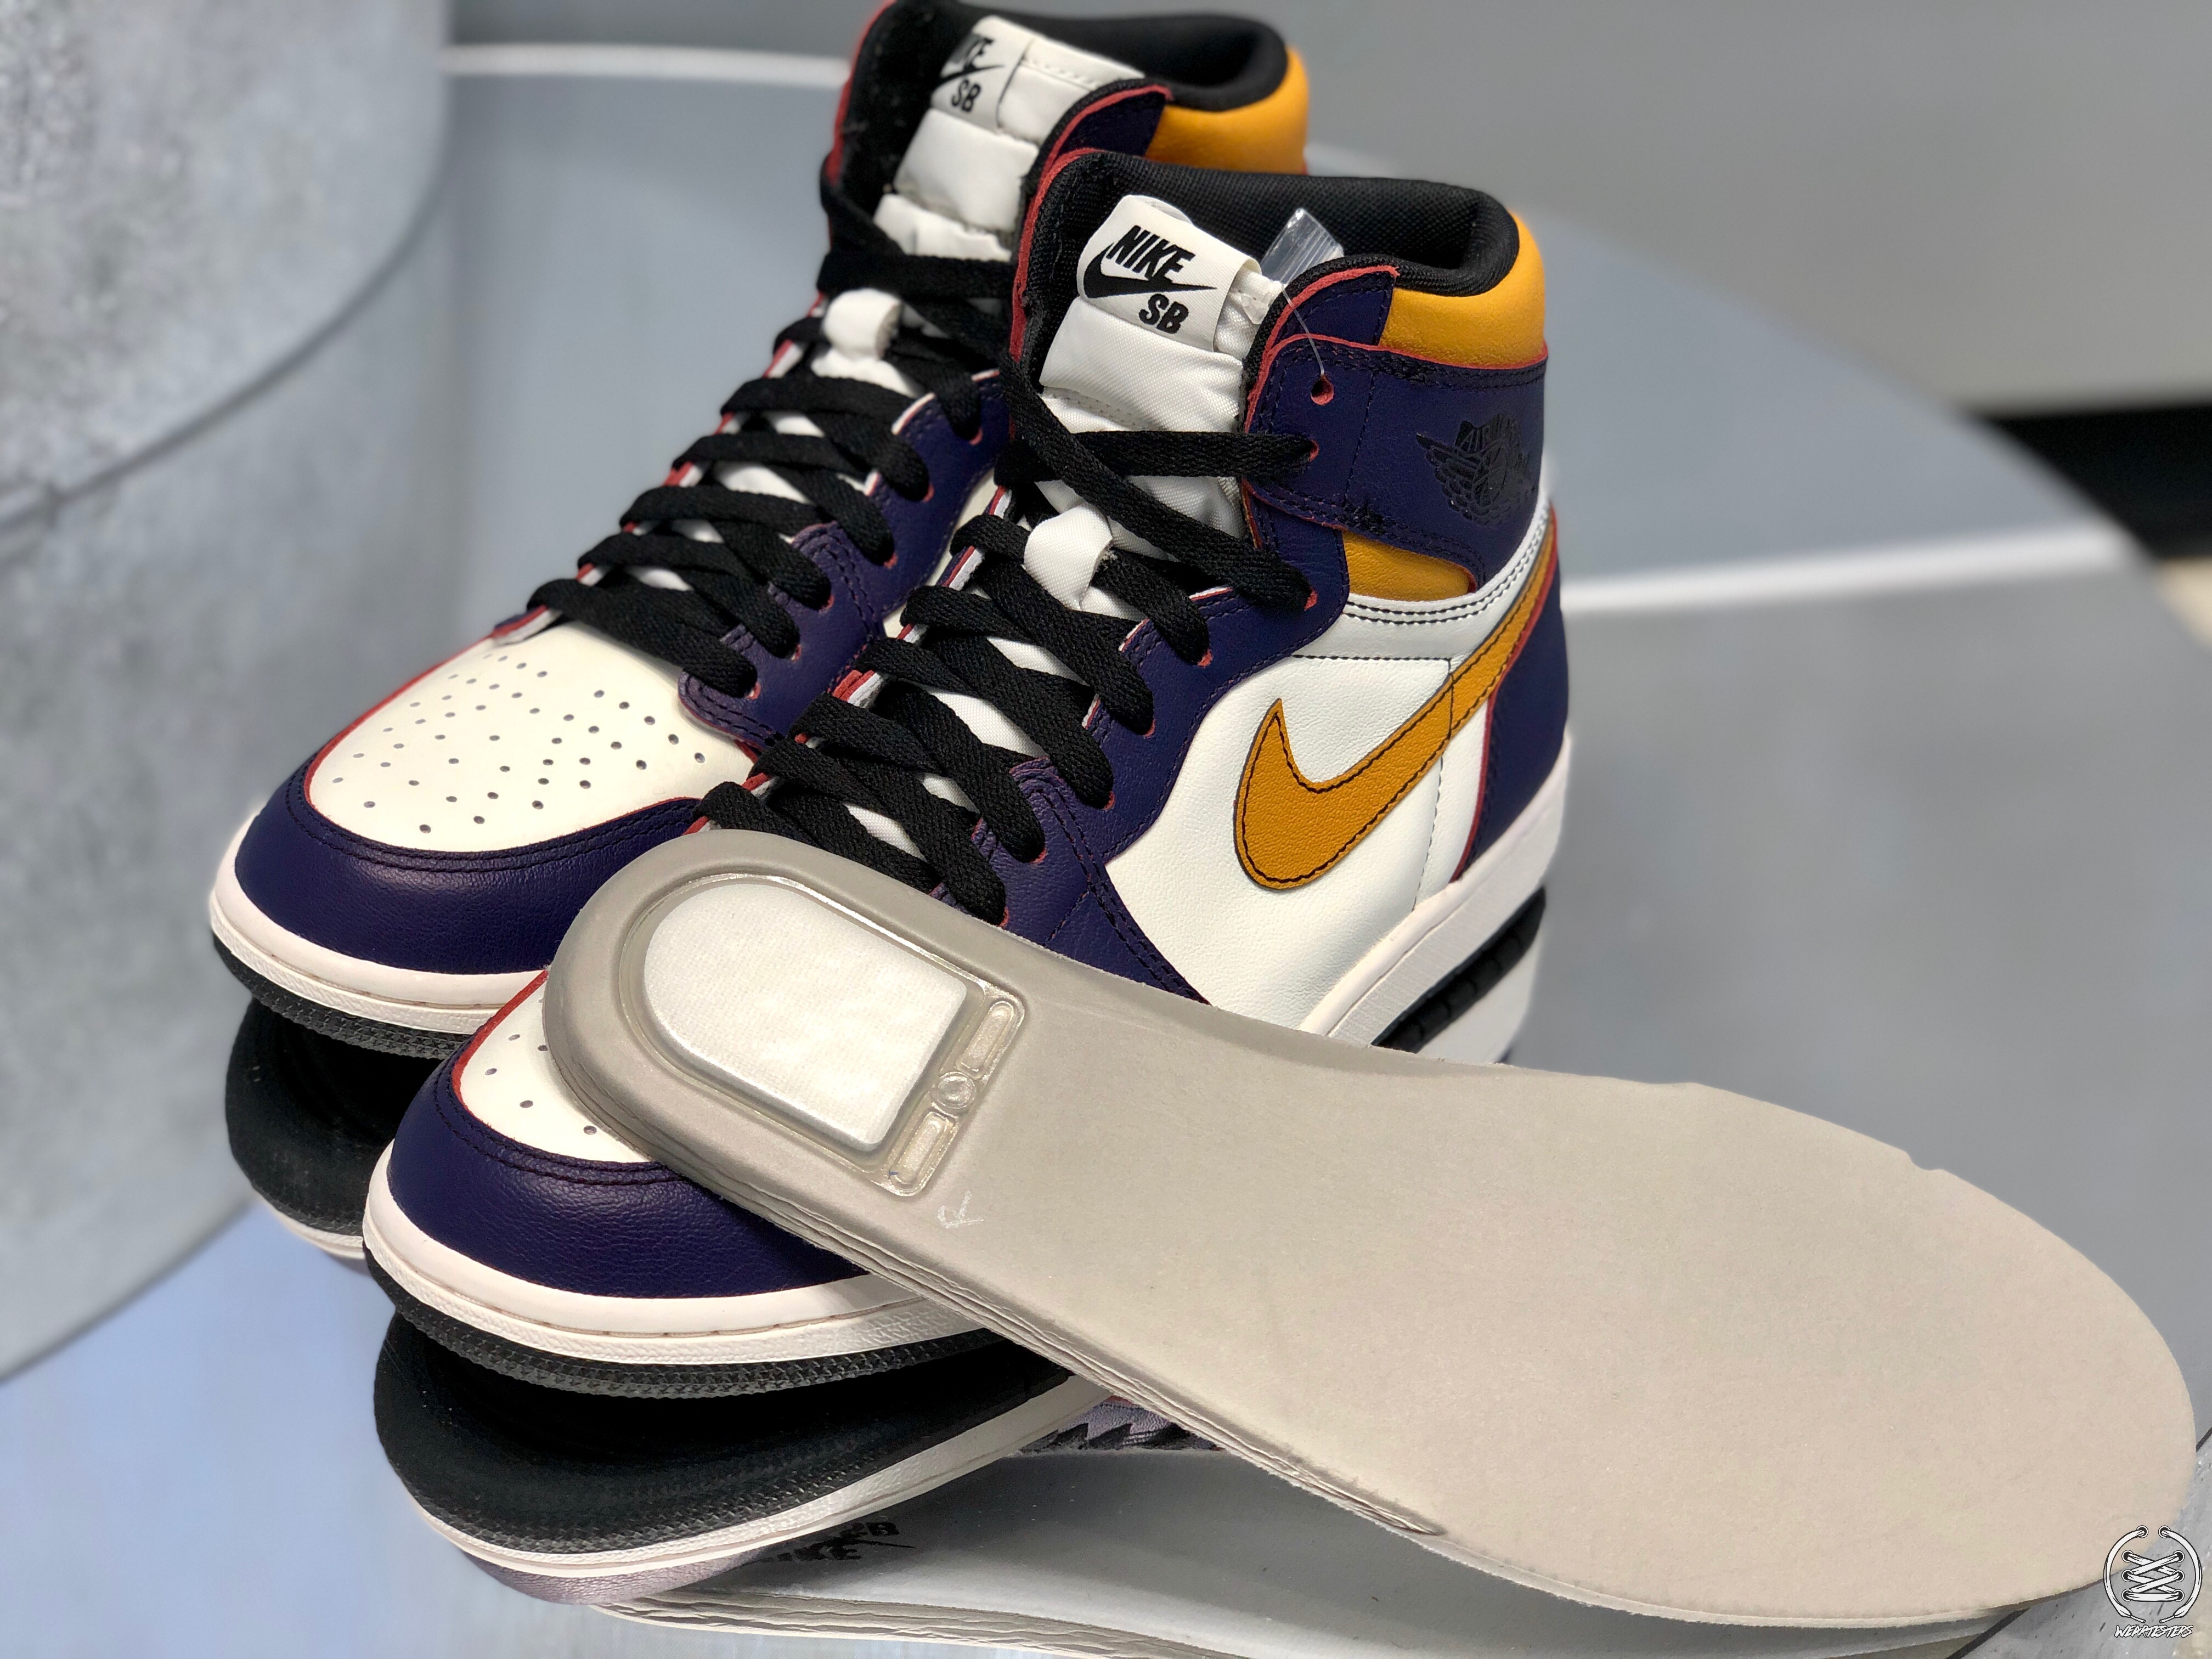 Jordan Brand Enters the Skateboarding Market with Upcoming Nike SB